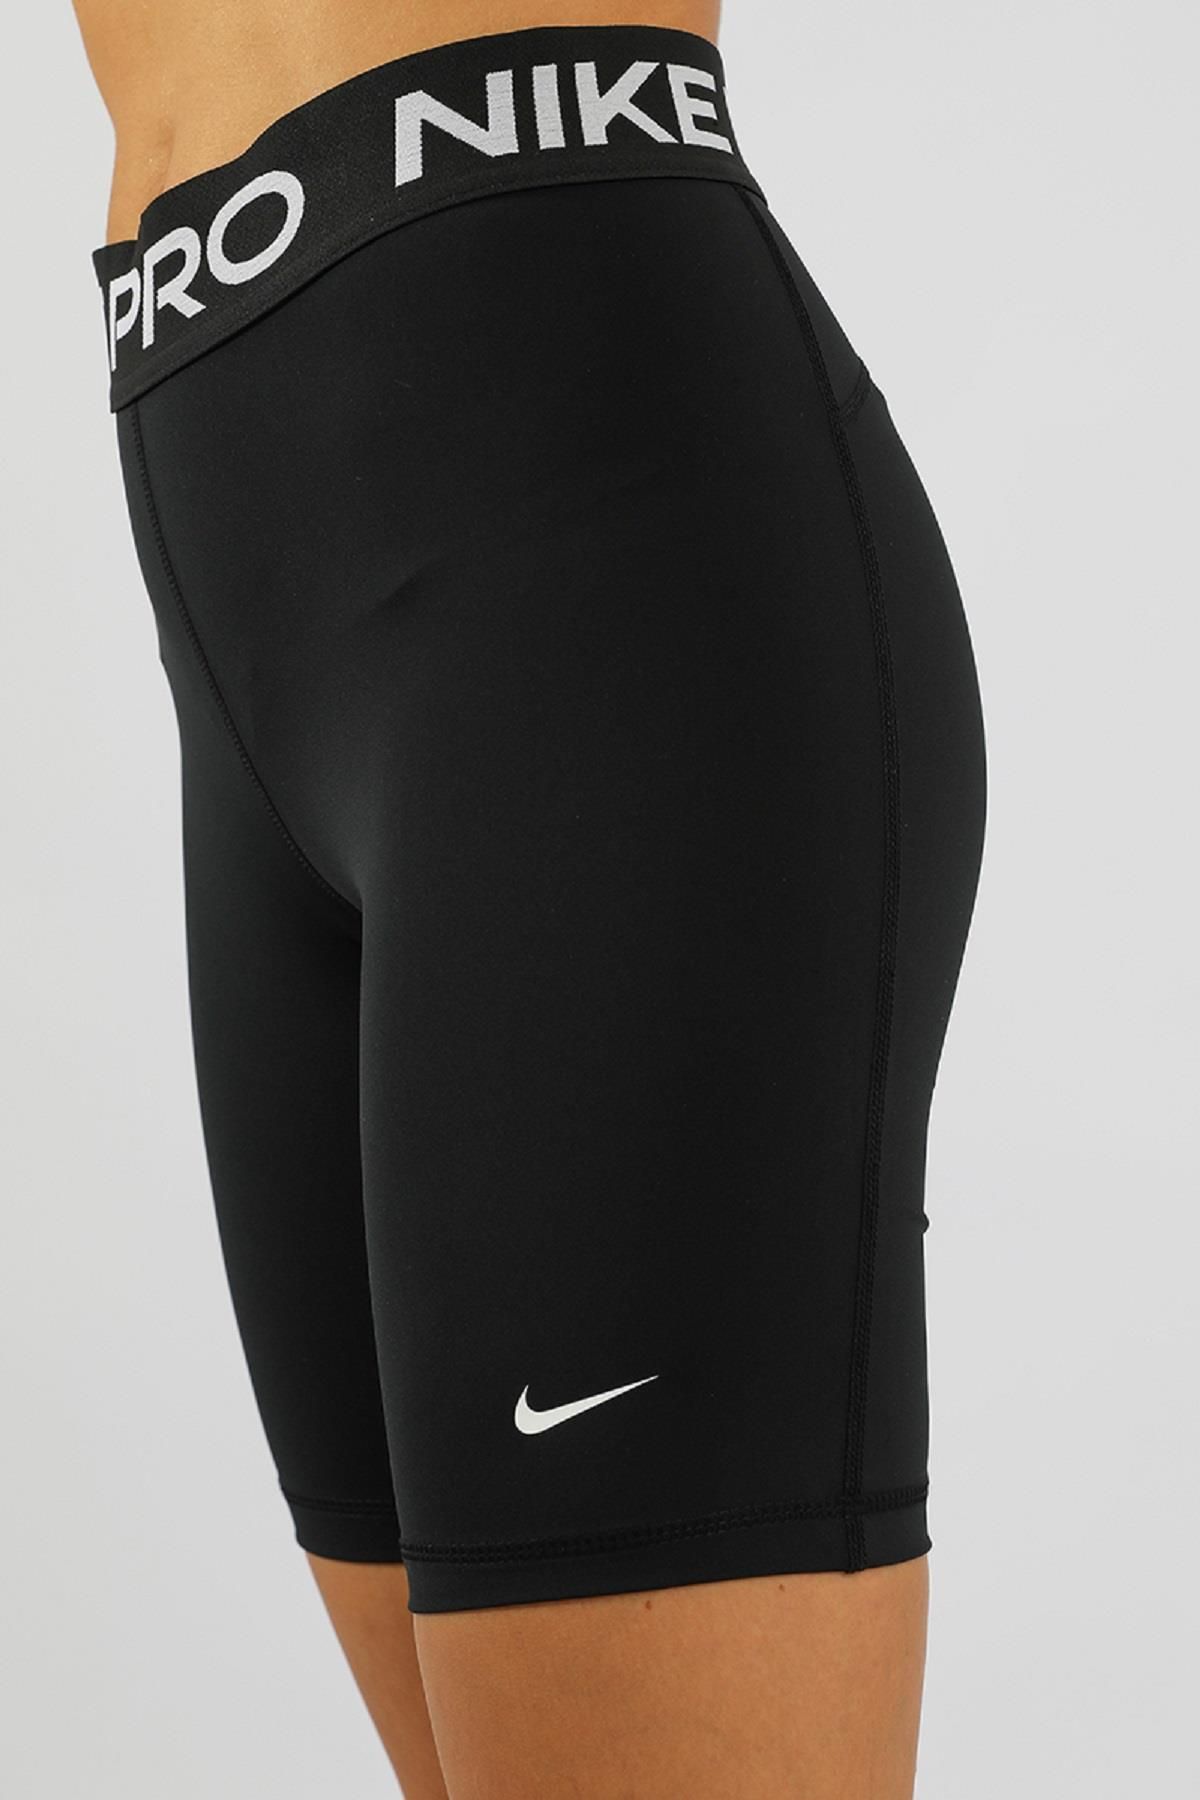 Nike Pro 365 Women's Shorts Tights 8 inch Siyah Tayt Şort